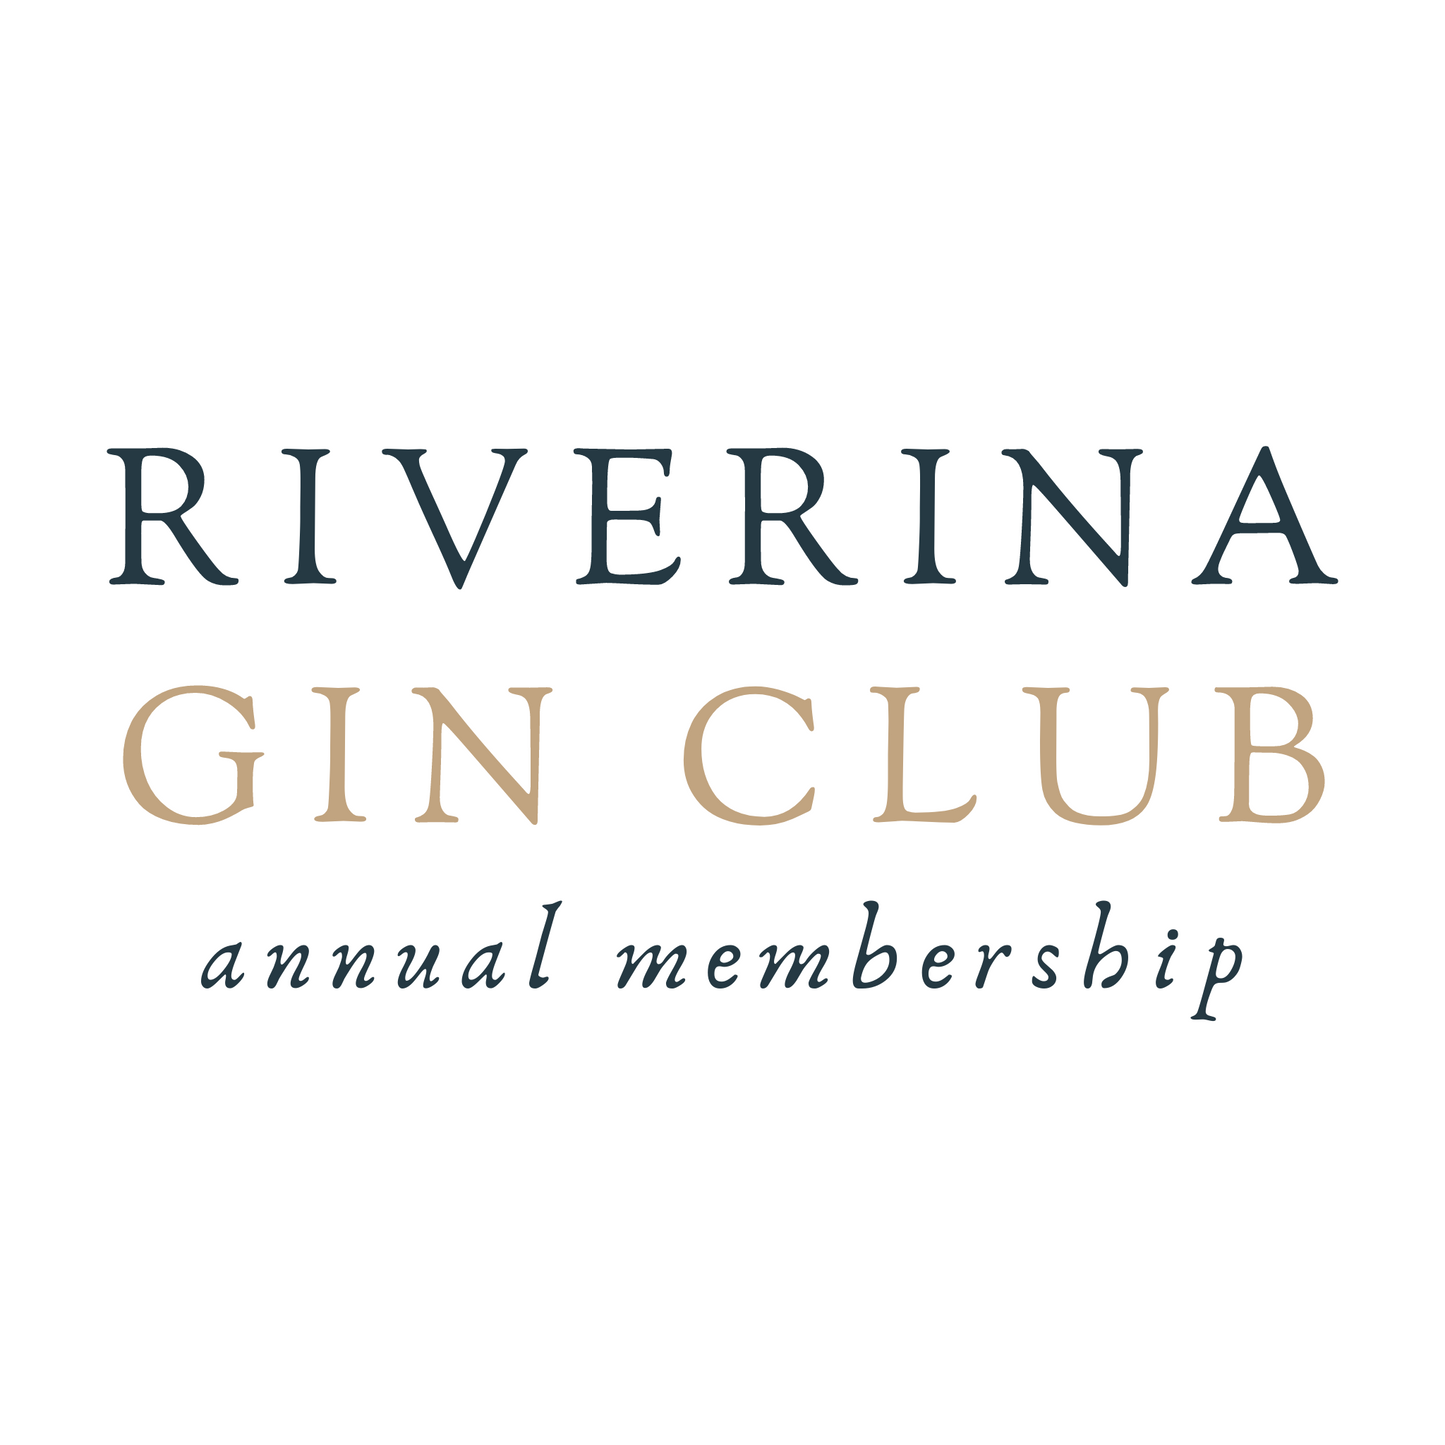 Riverina Gin Club Annual Membership